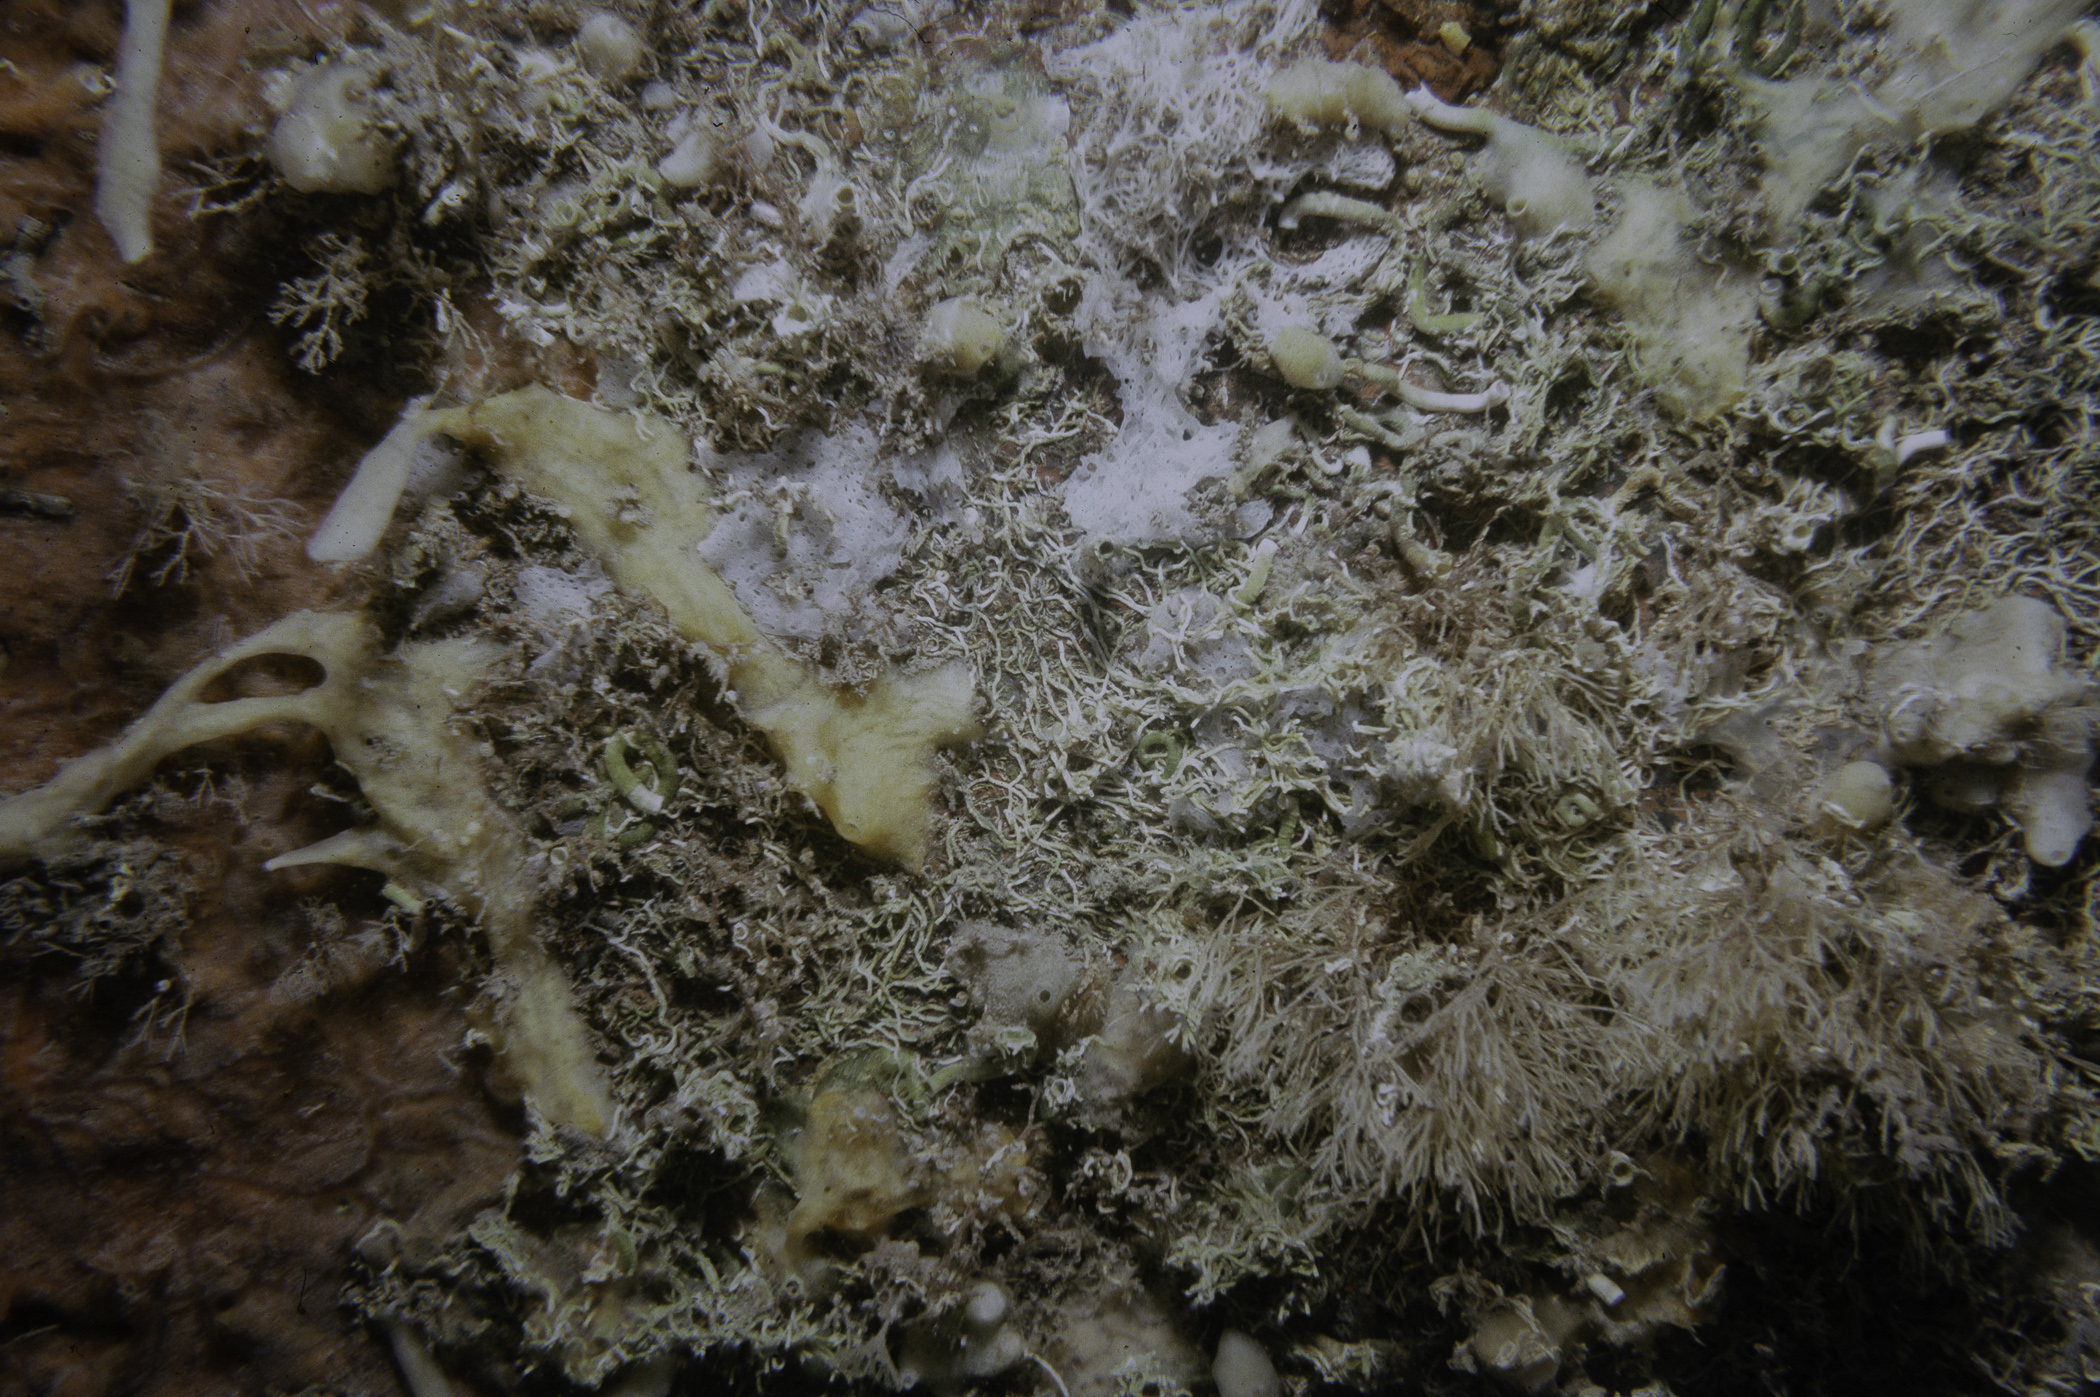 Halichondria bowerbanki, Clathrina coriacea, Clathria sp., Filograna implexa. Site: Lee's Wreck, Ballyhenry Bay Strangford Lough. 